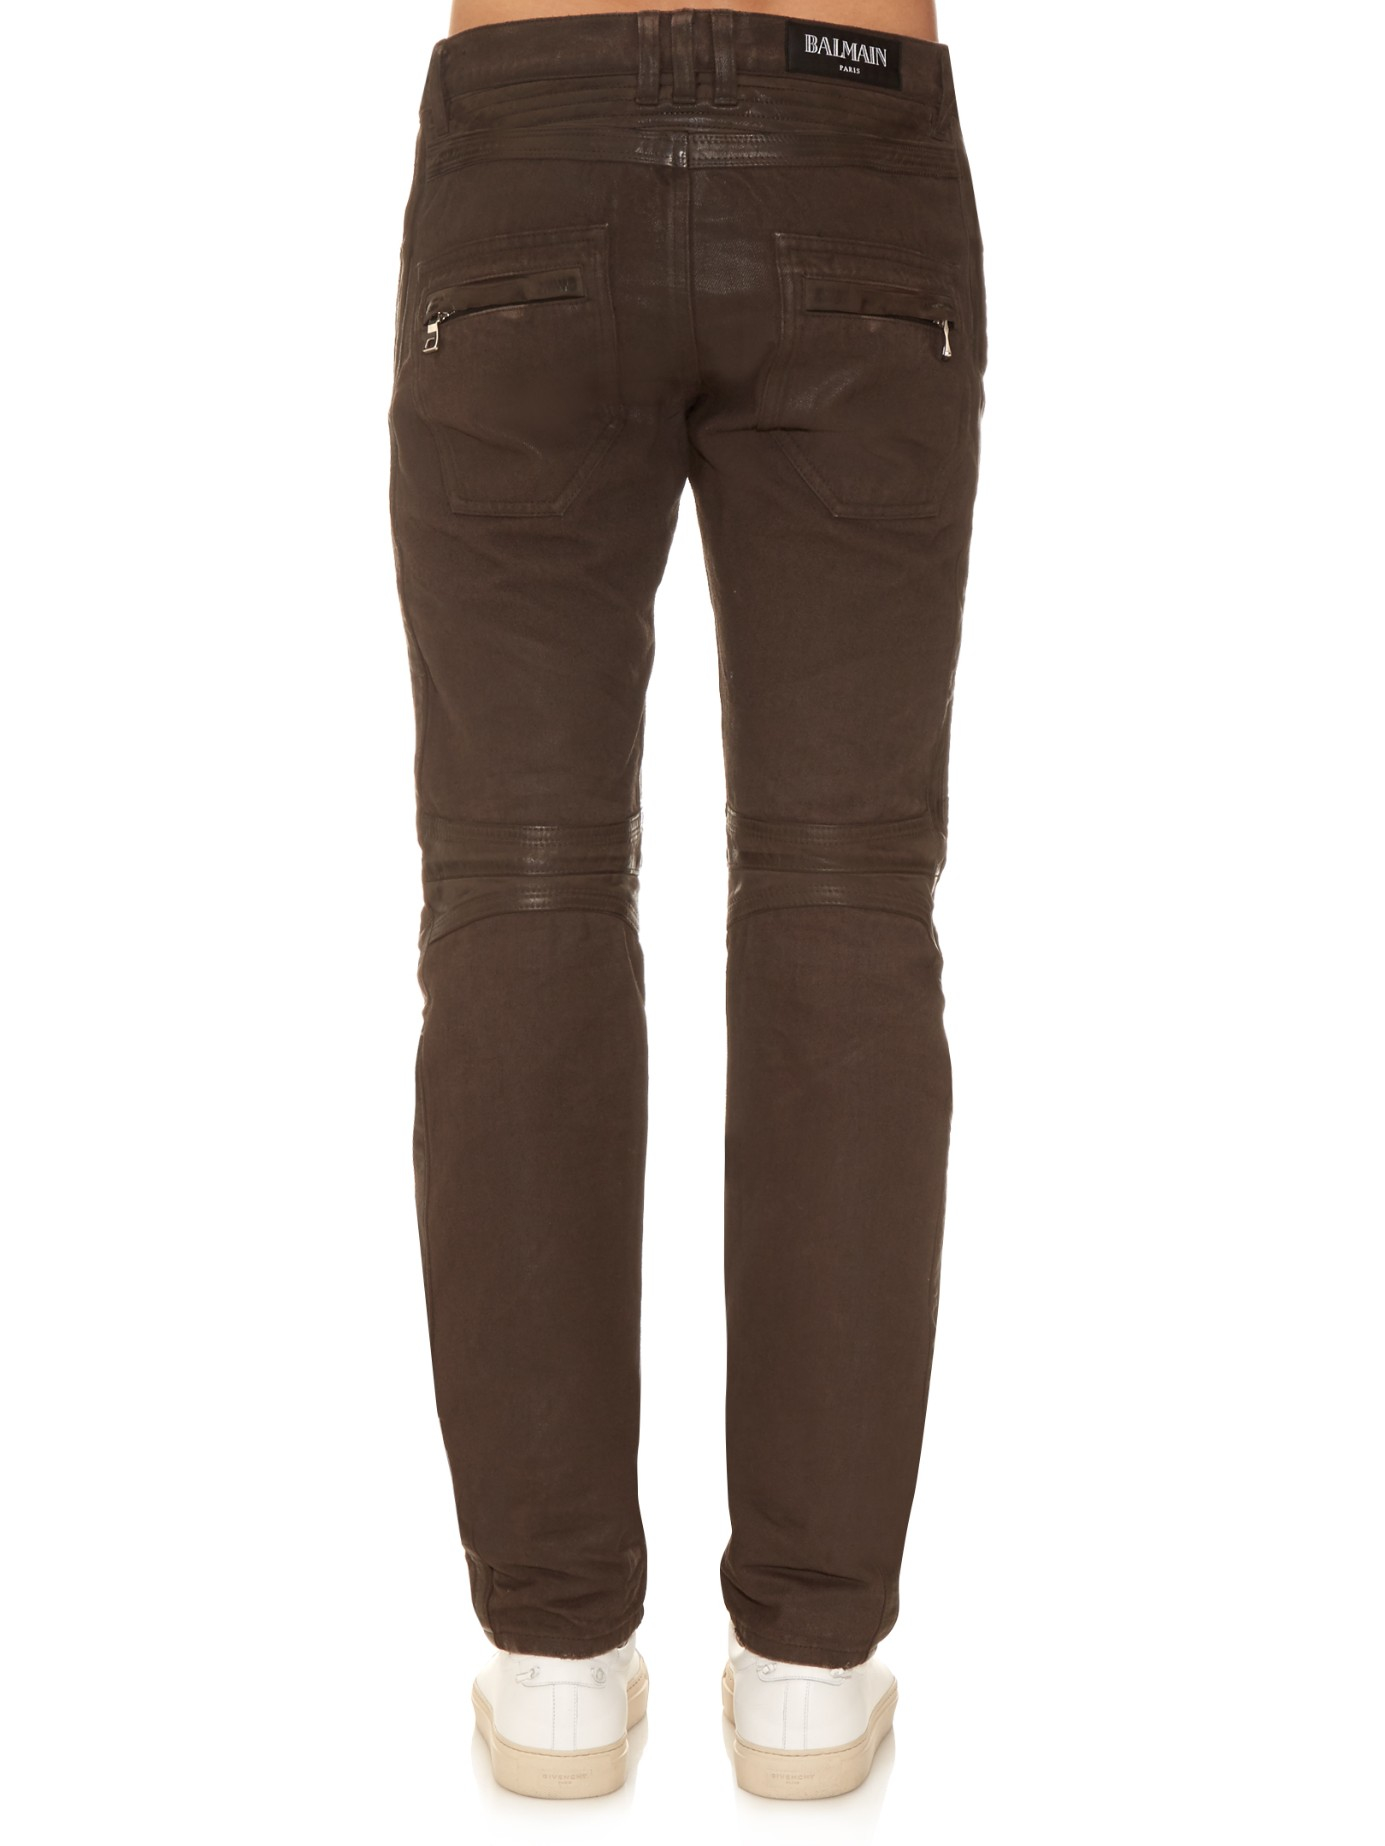 Lyst - Balmain Biker Leather-panel Jeans in Brown for Men